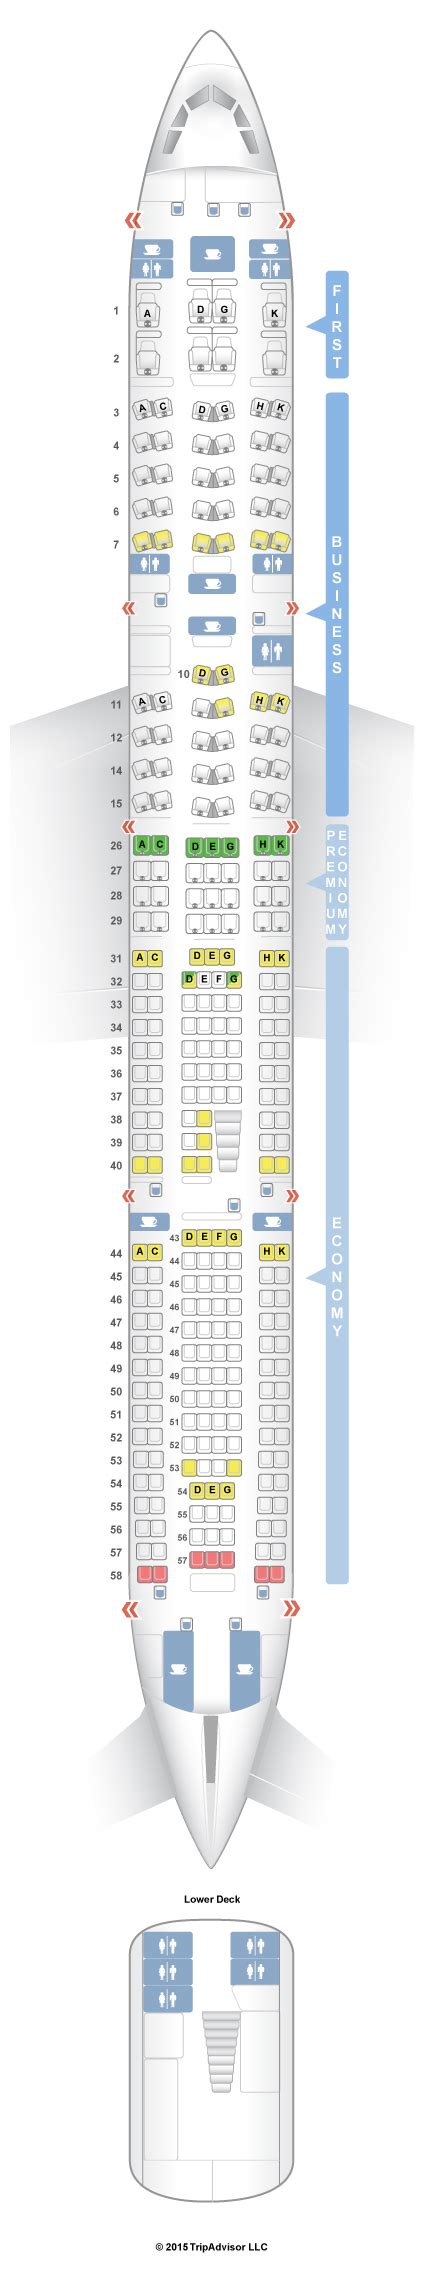 Lufthansa Airbus A320 Sharklets Seat Map